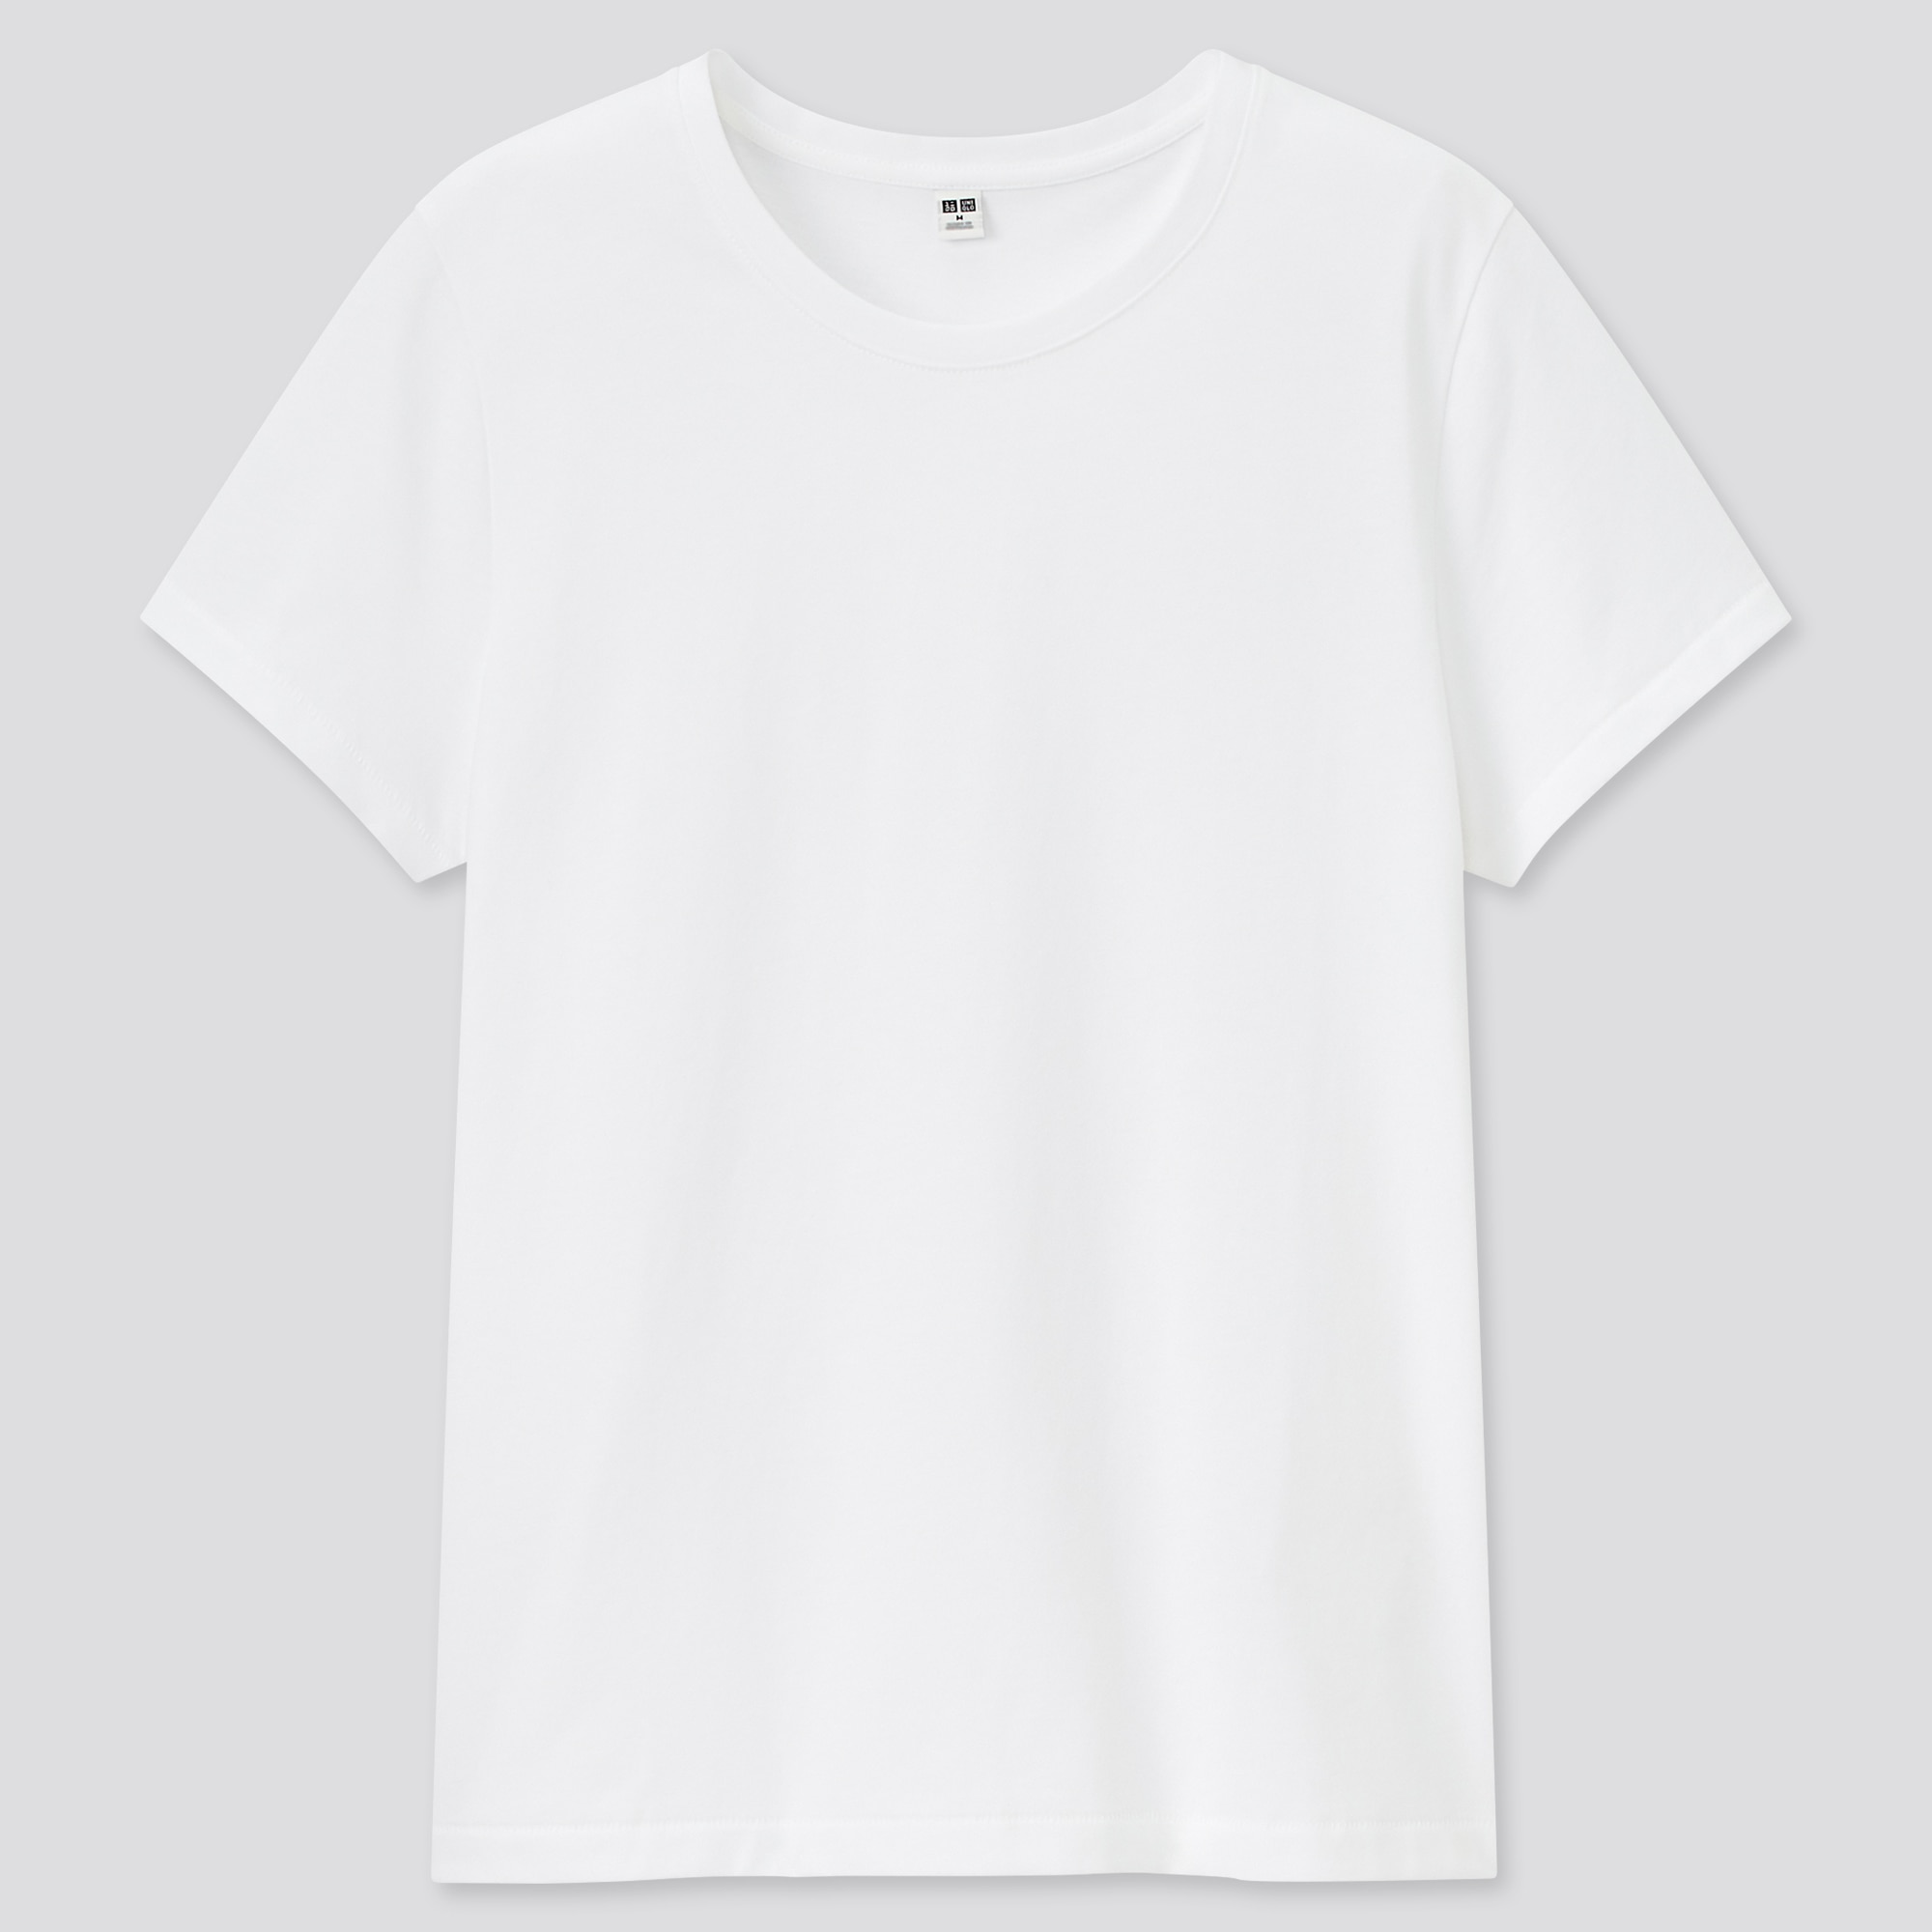 Chia sẻ 72 về uniqlo supima cotton t shirt review mới nhất  Du học Akina